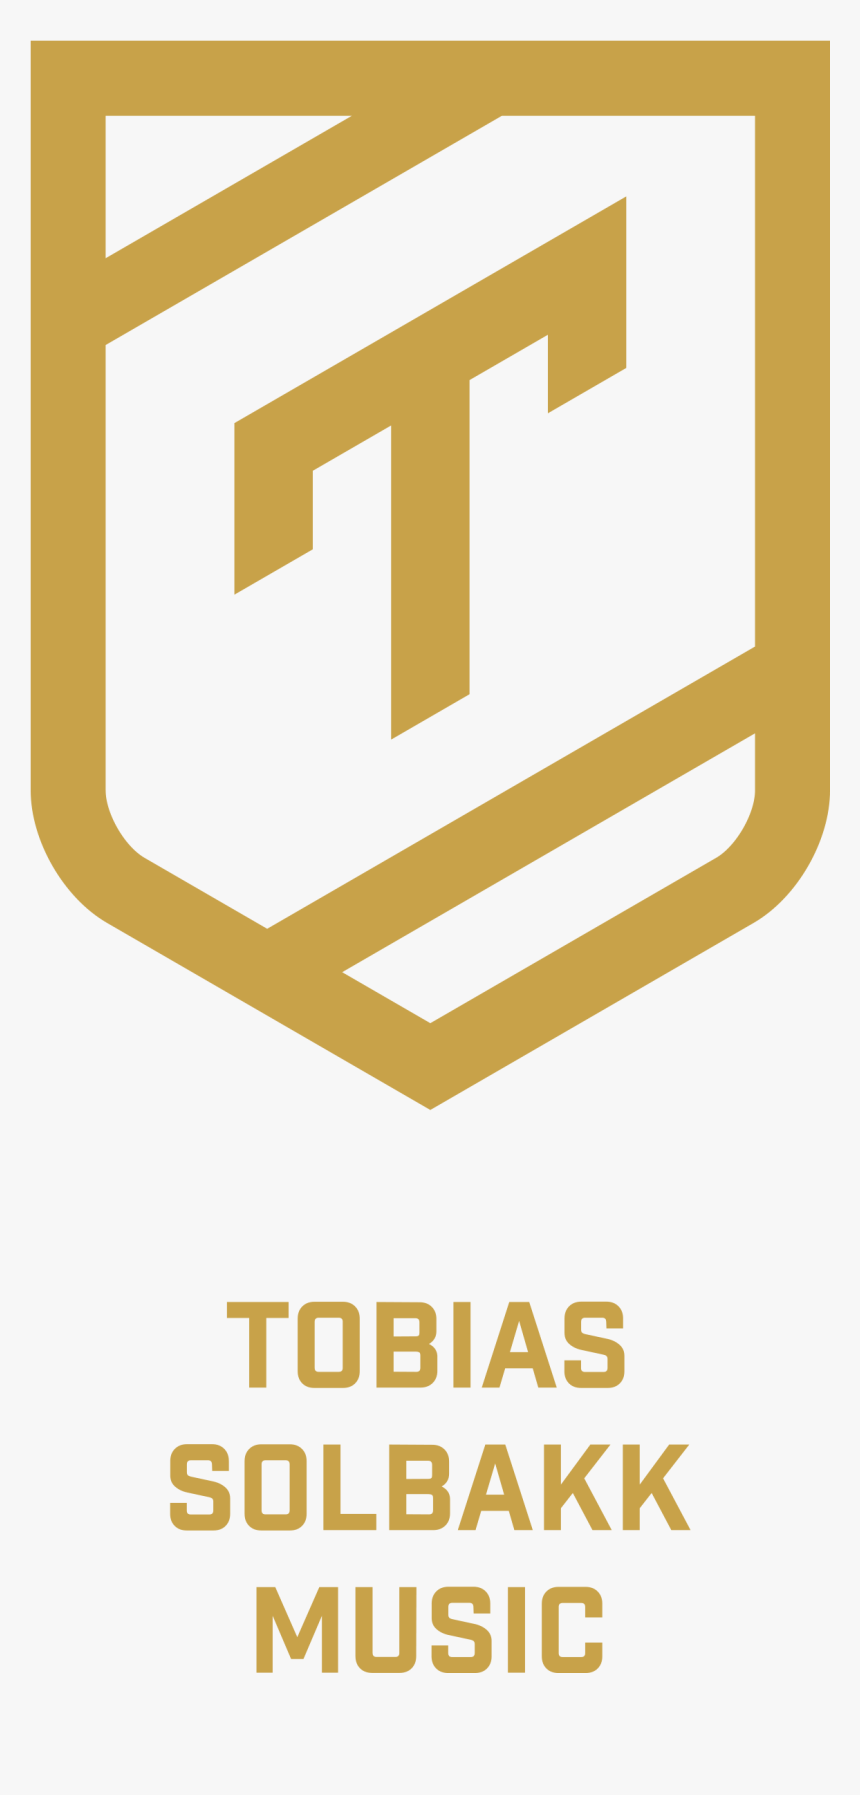 Tsm Logo Png, Transparent Png, Free Download